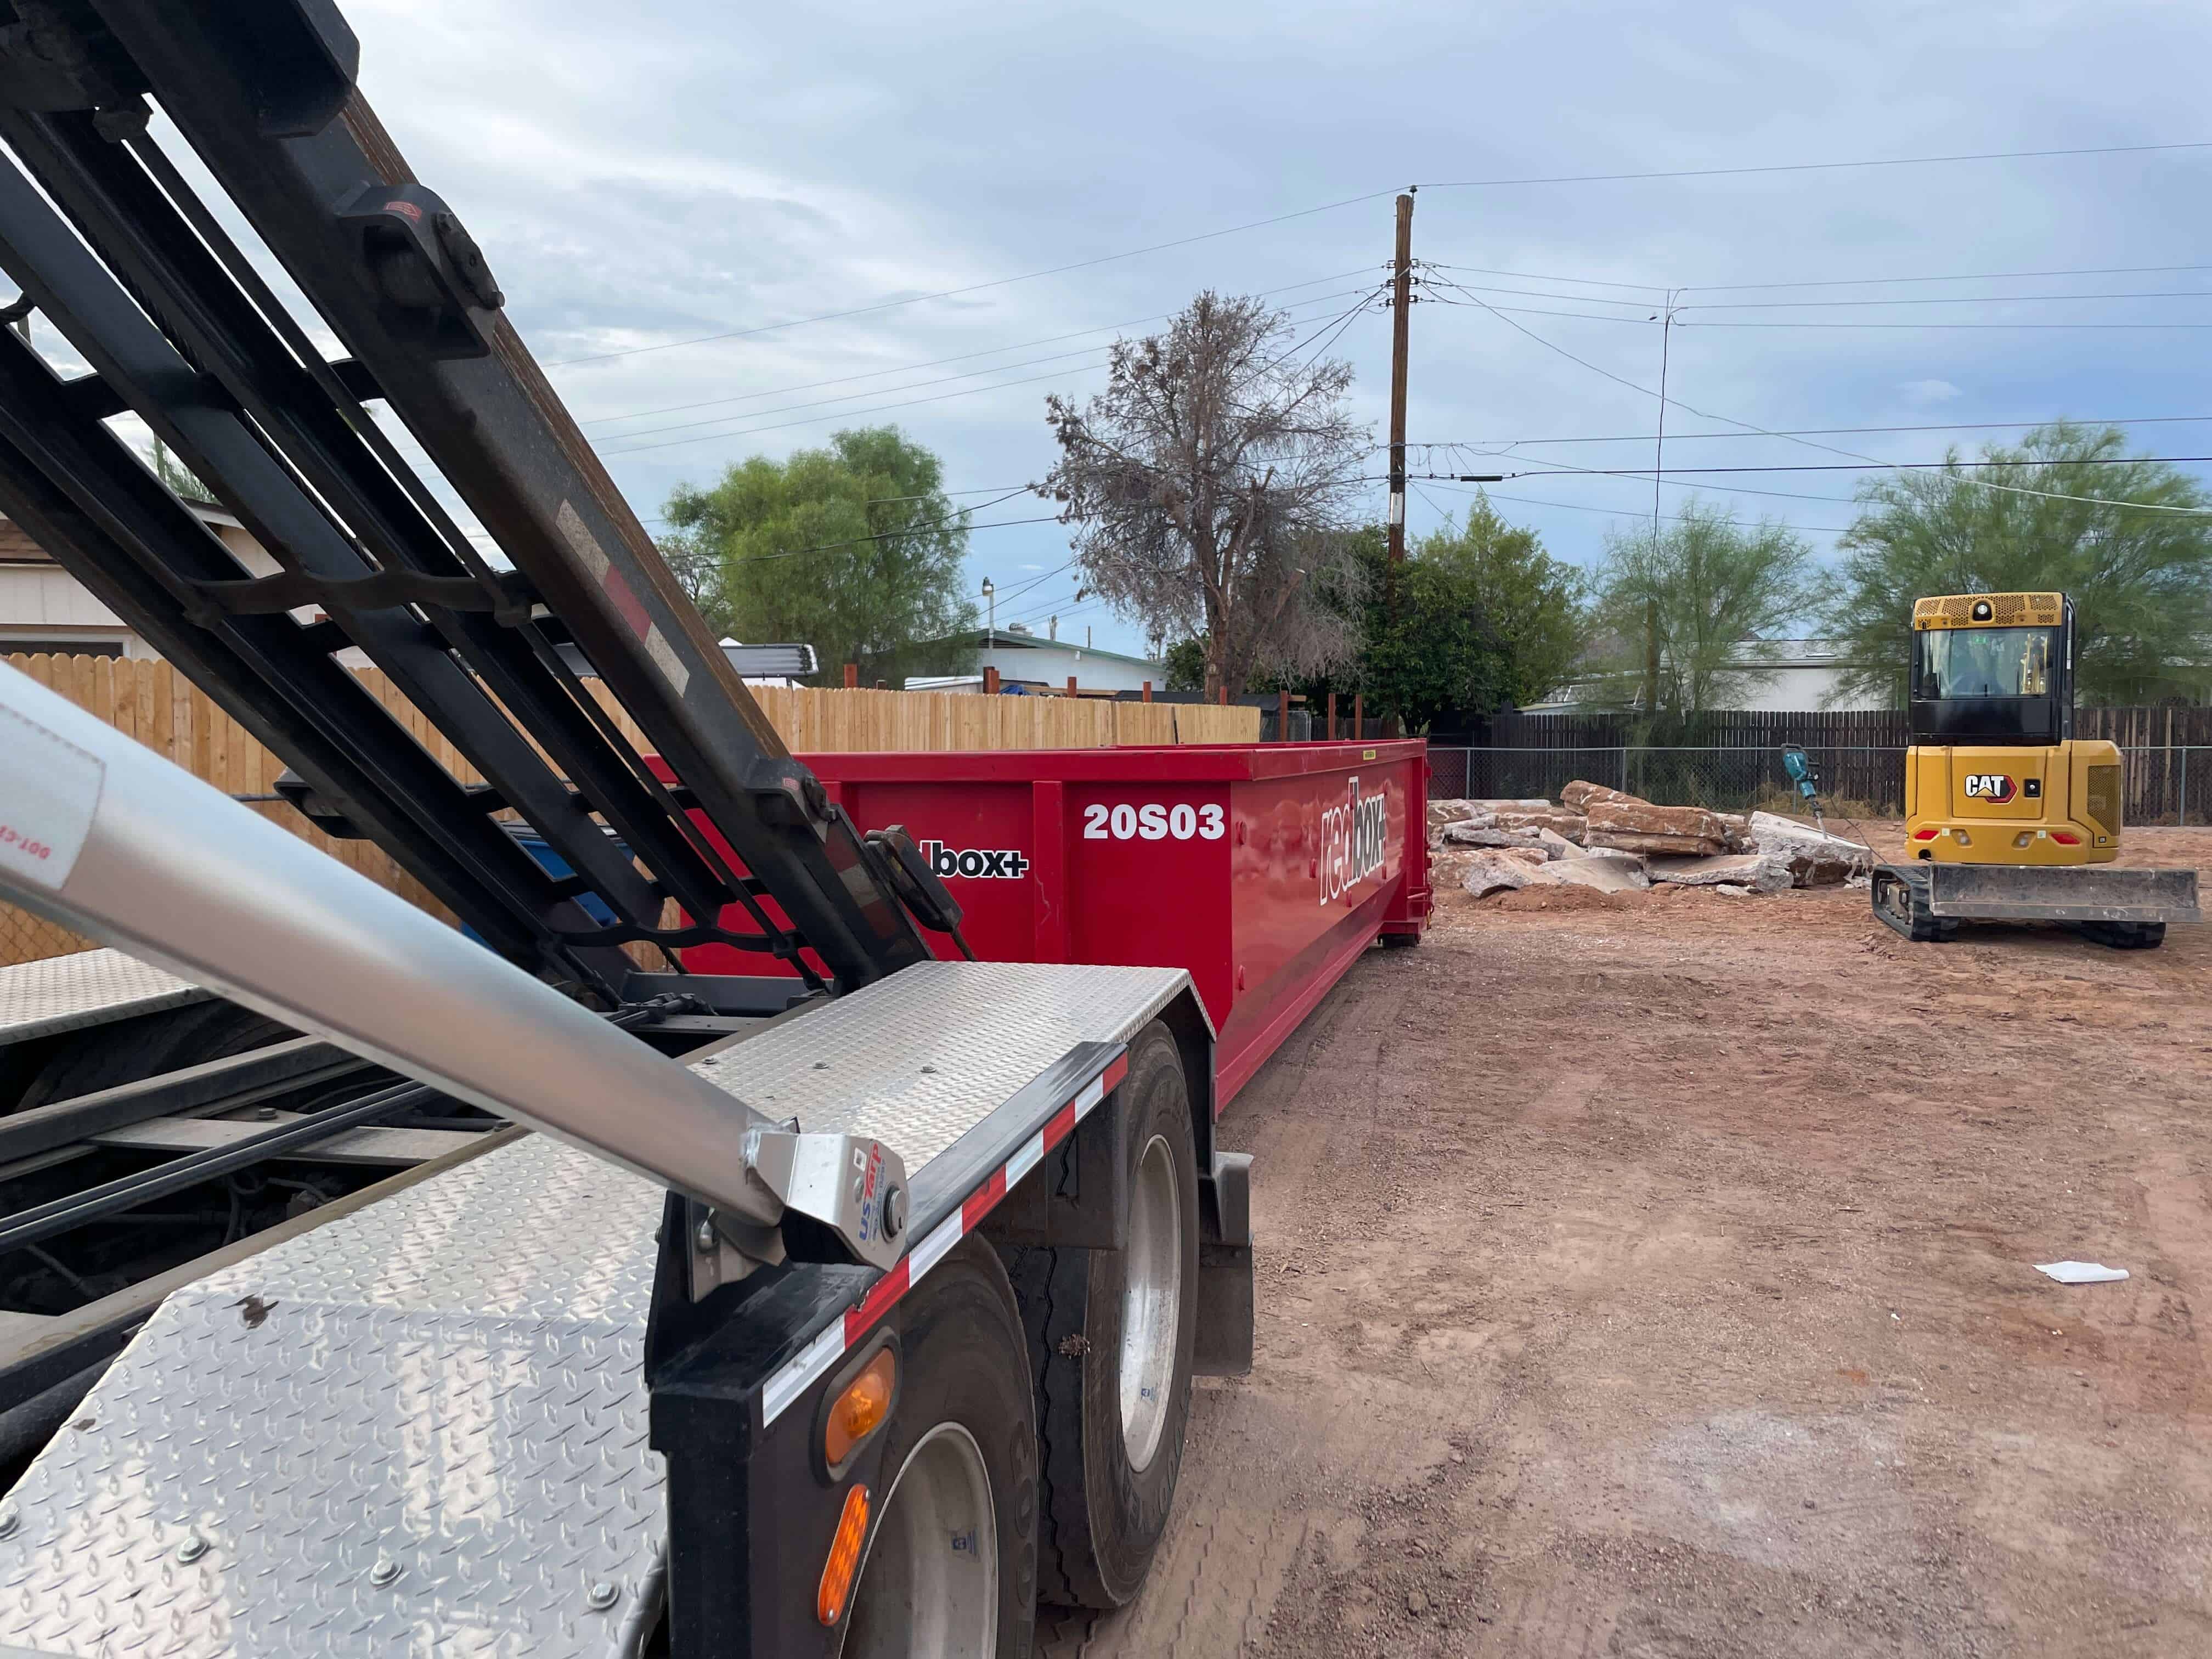 10 yard dumpster rental in gilbert and mesa arizona